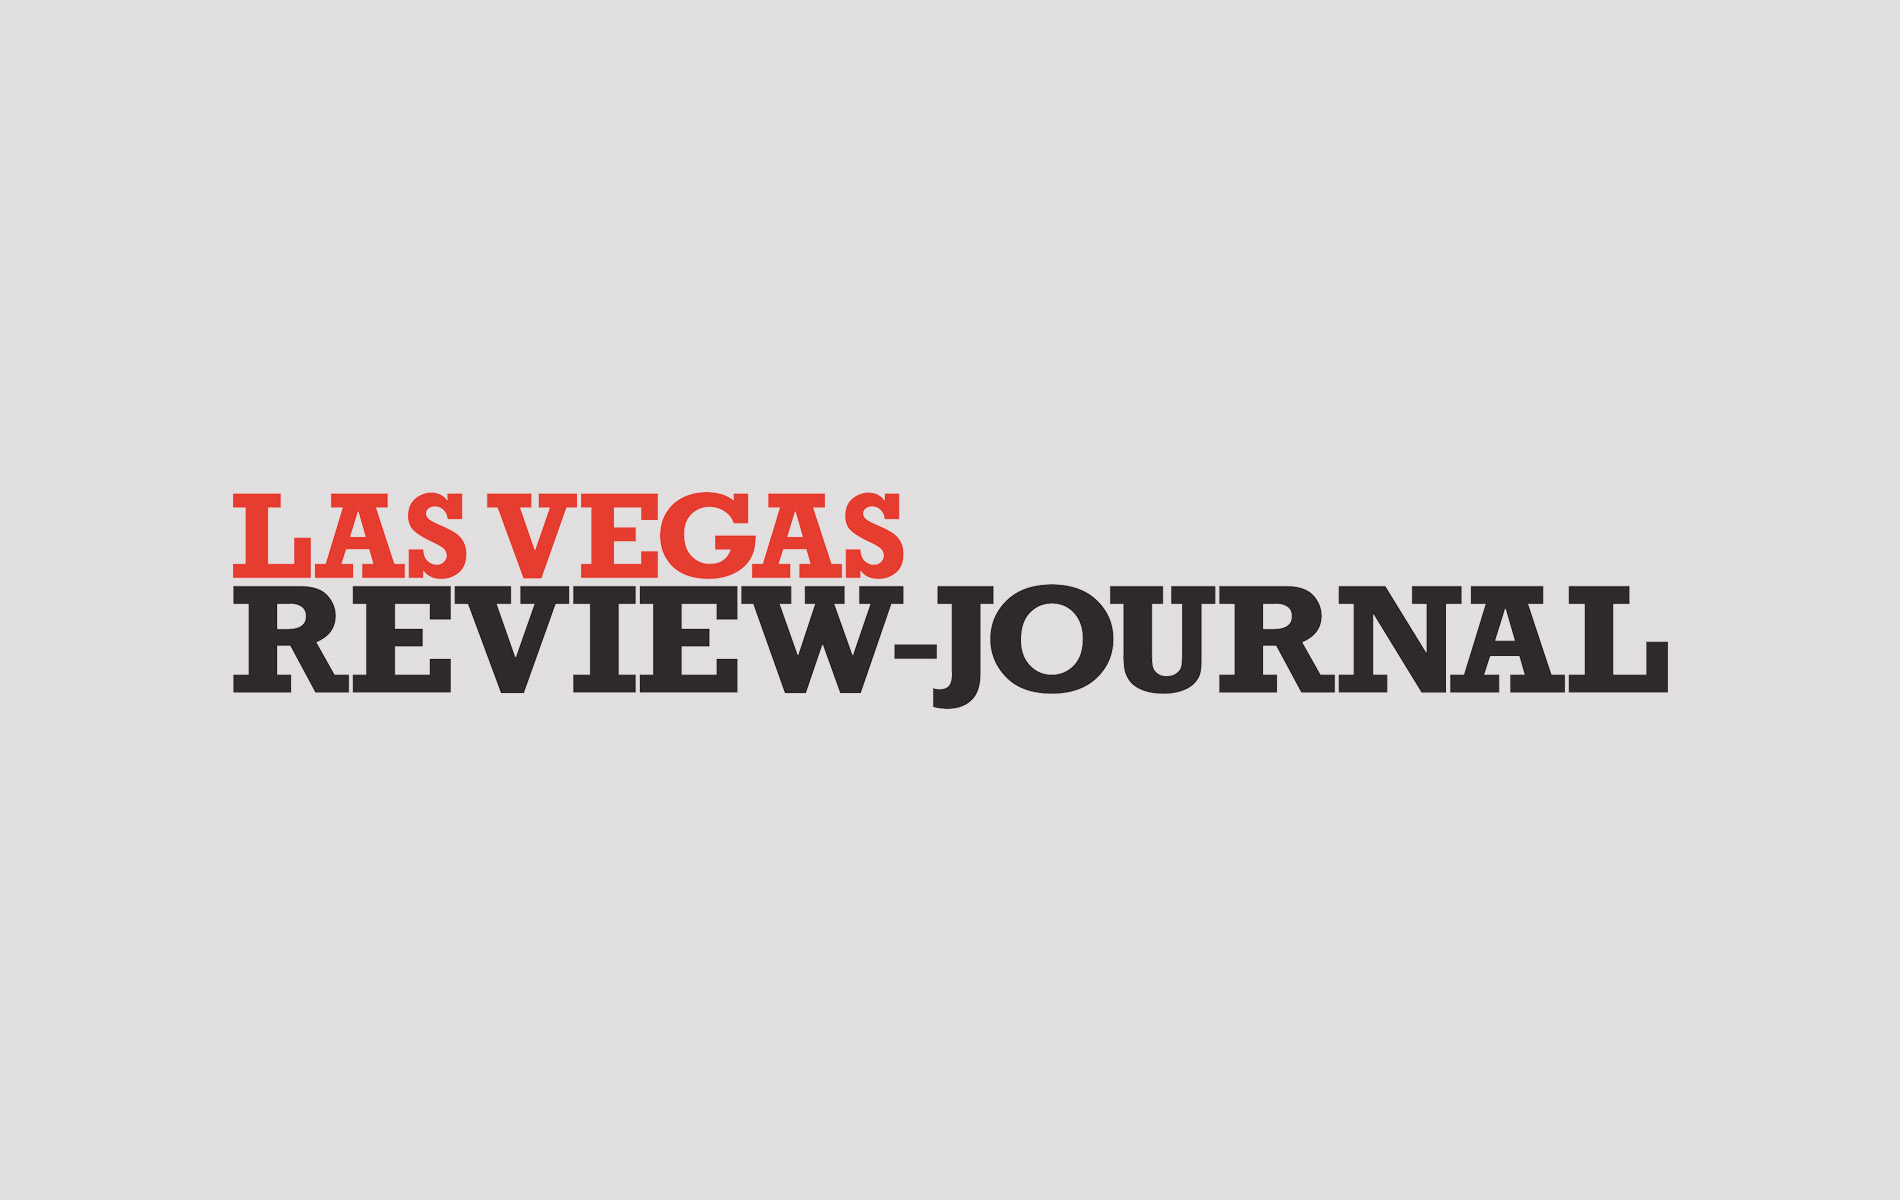 Las Vegas Review Journal